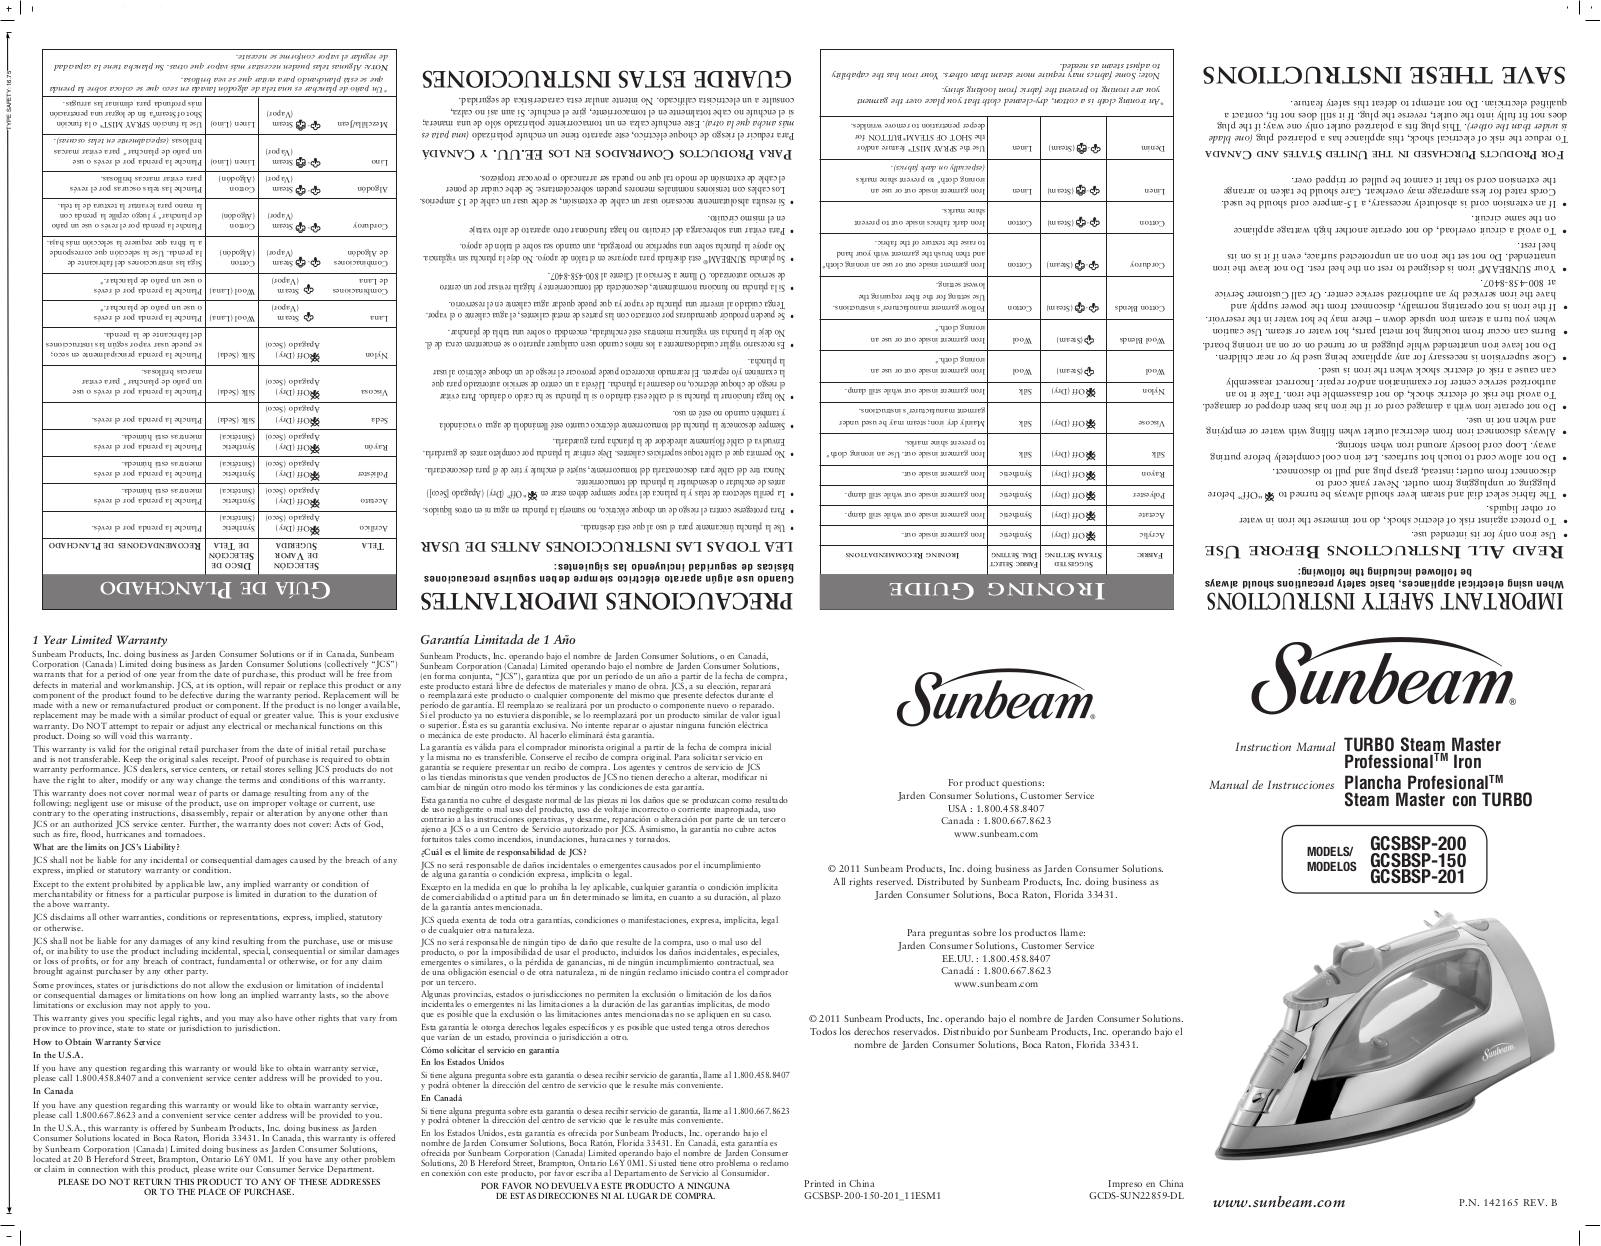 Sunbeam GCSBSP-201 Owner's Manual